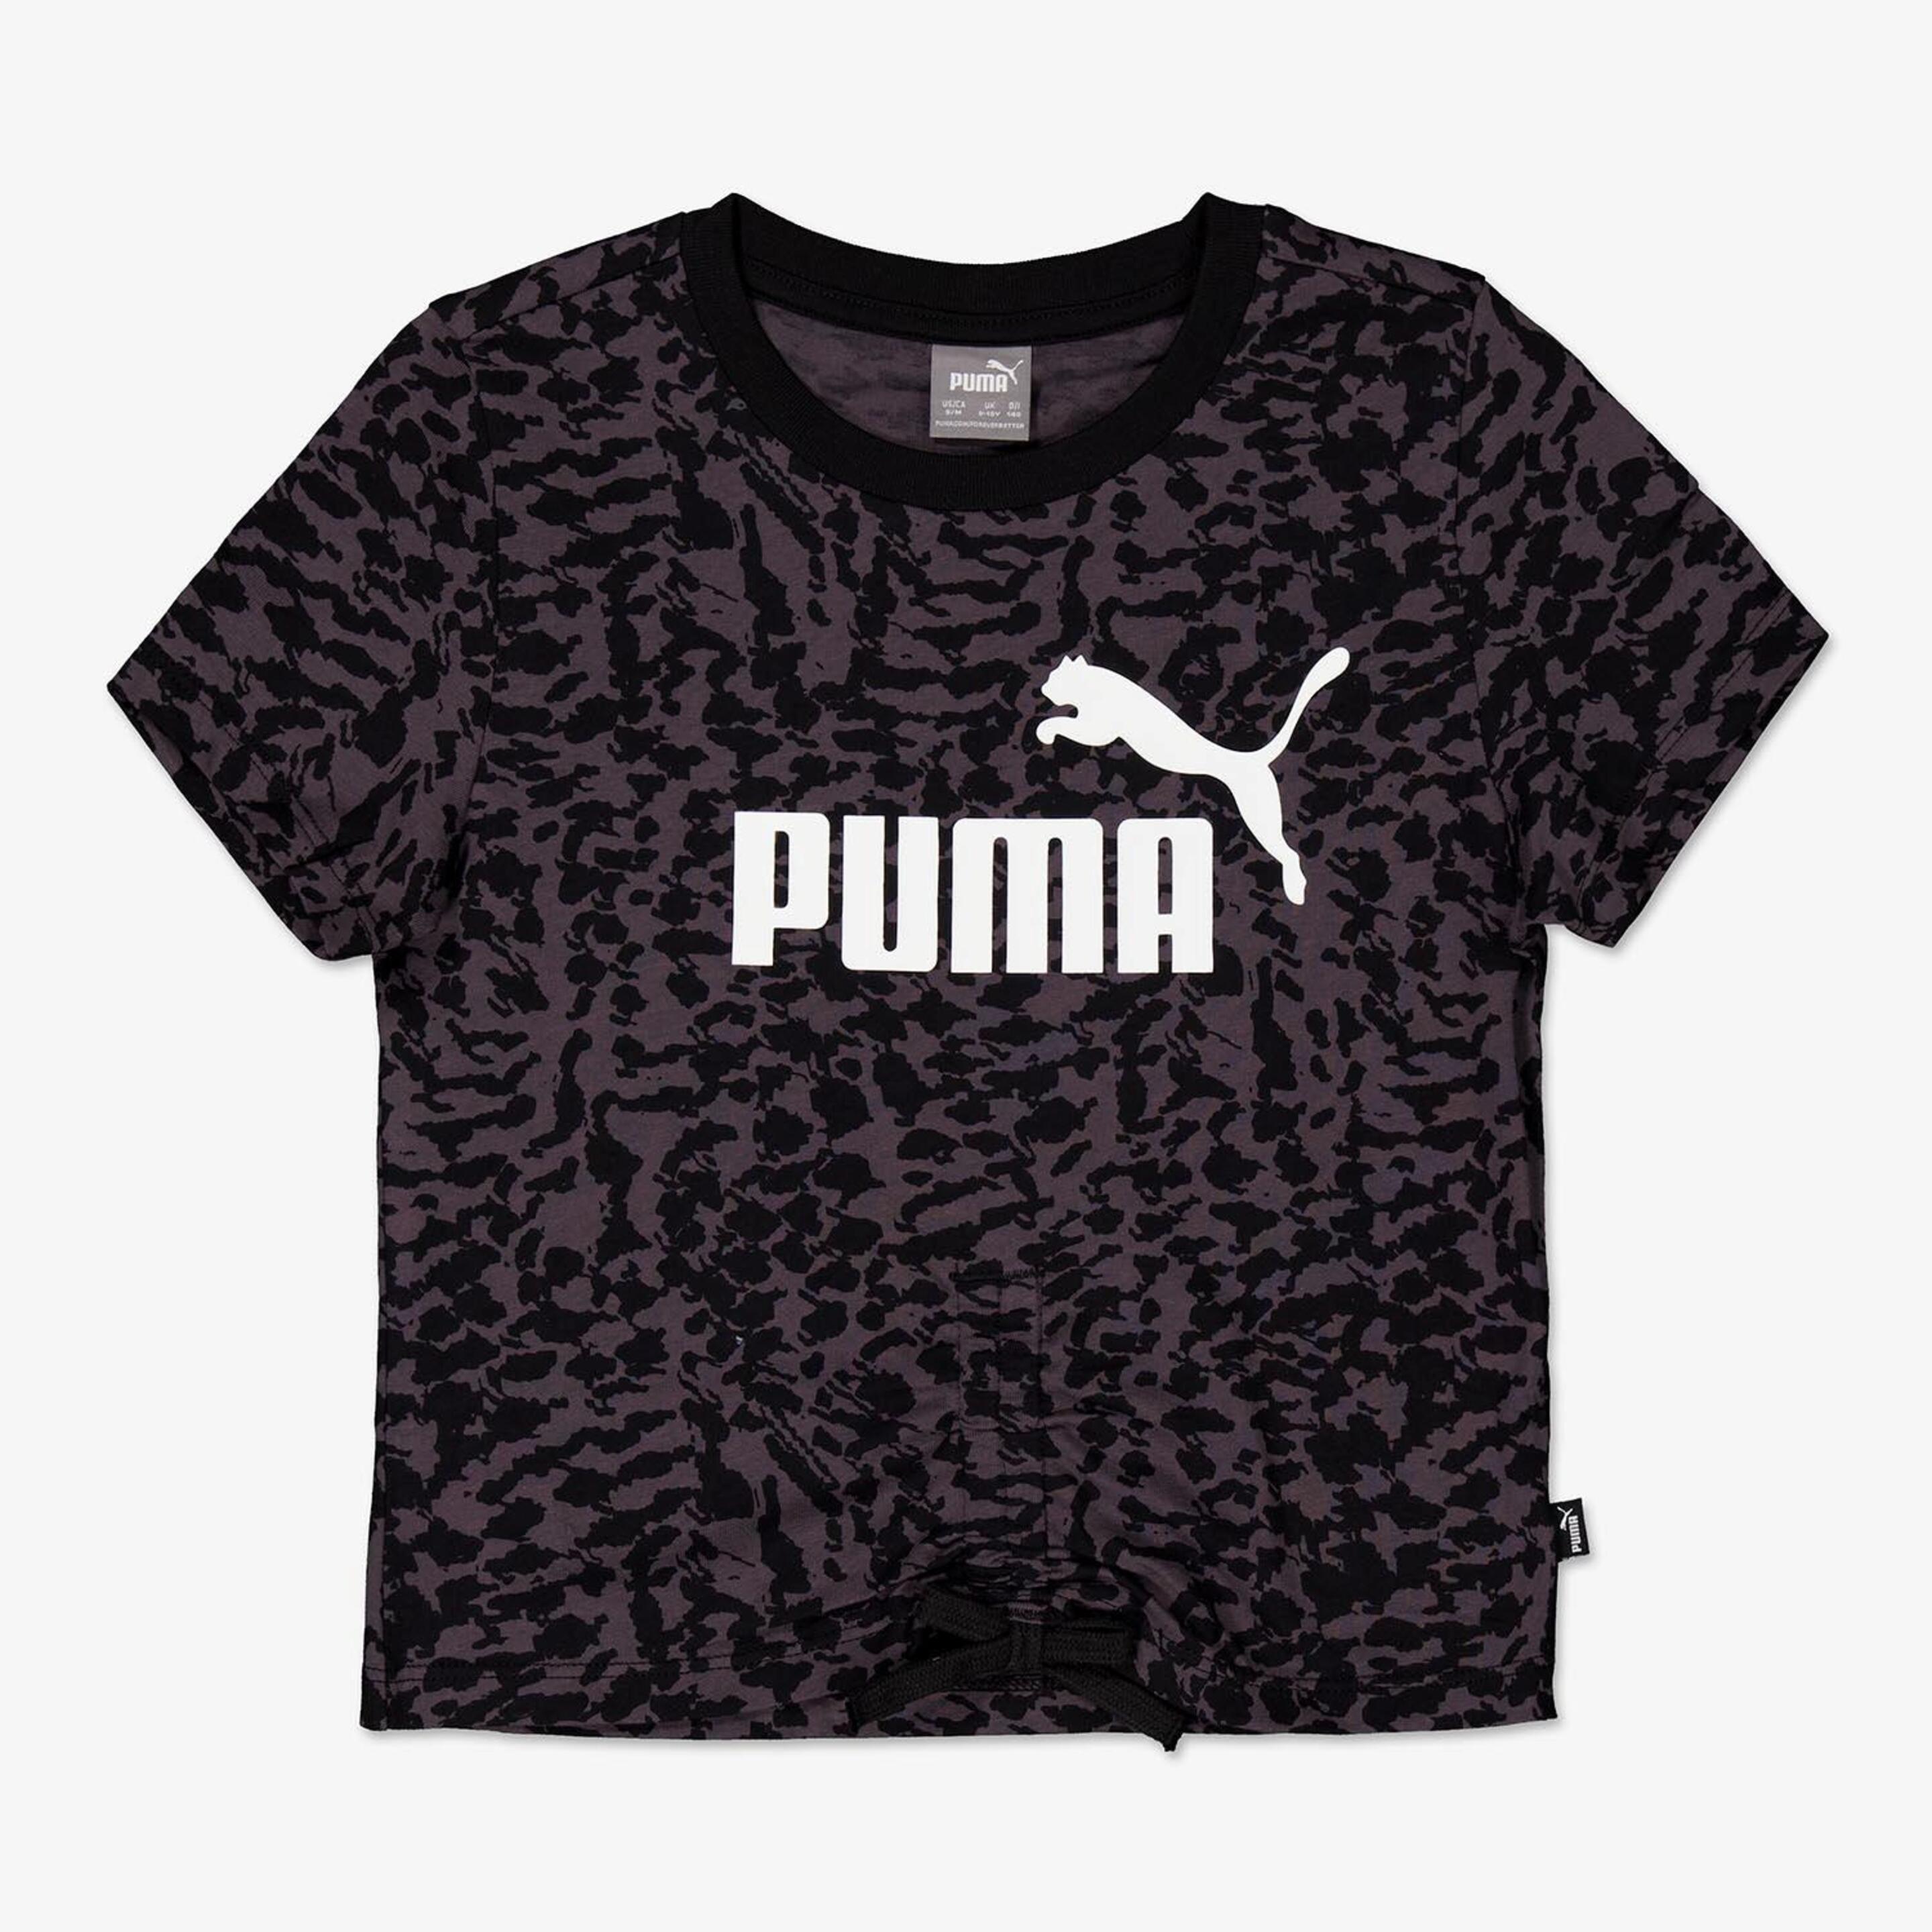 Puma Animal Print